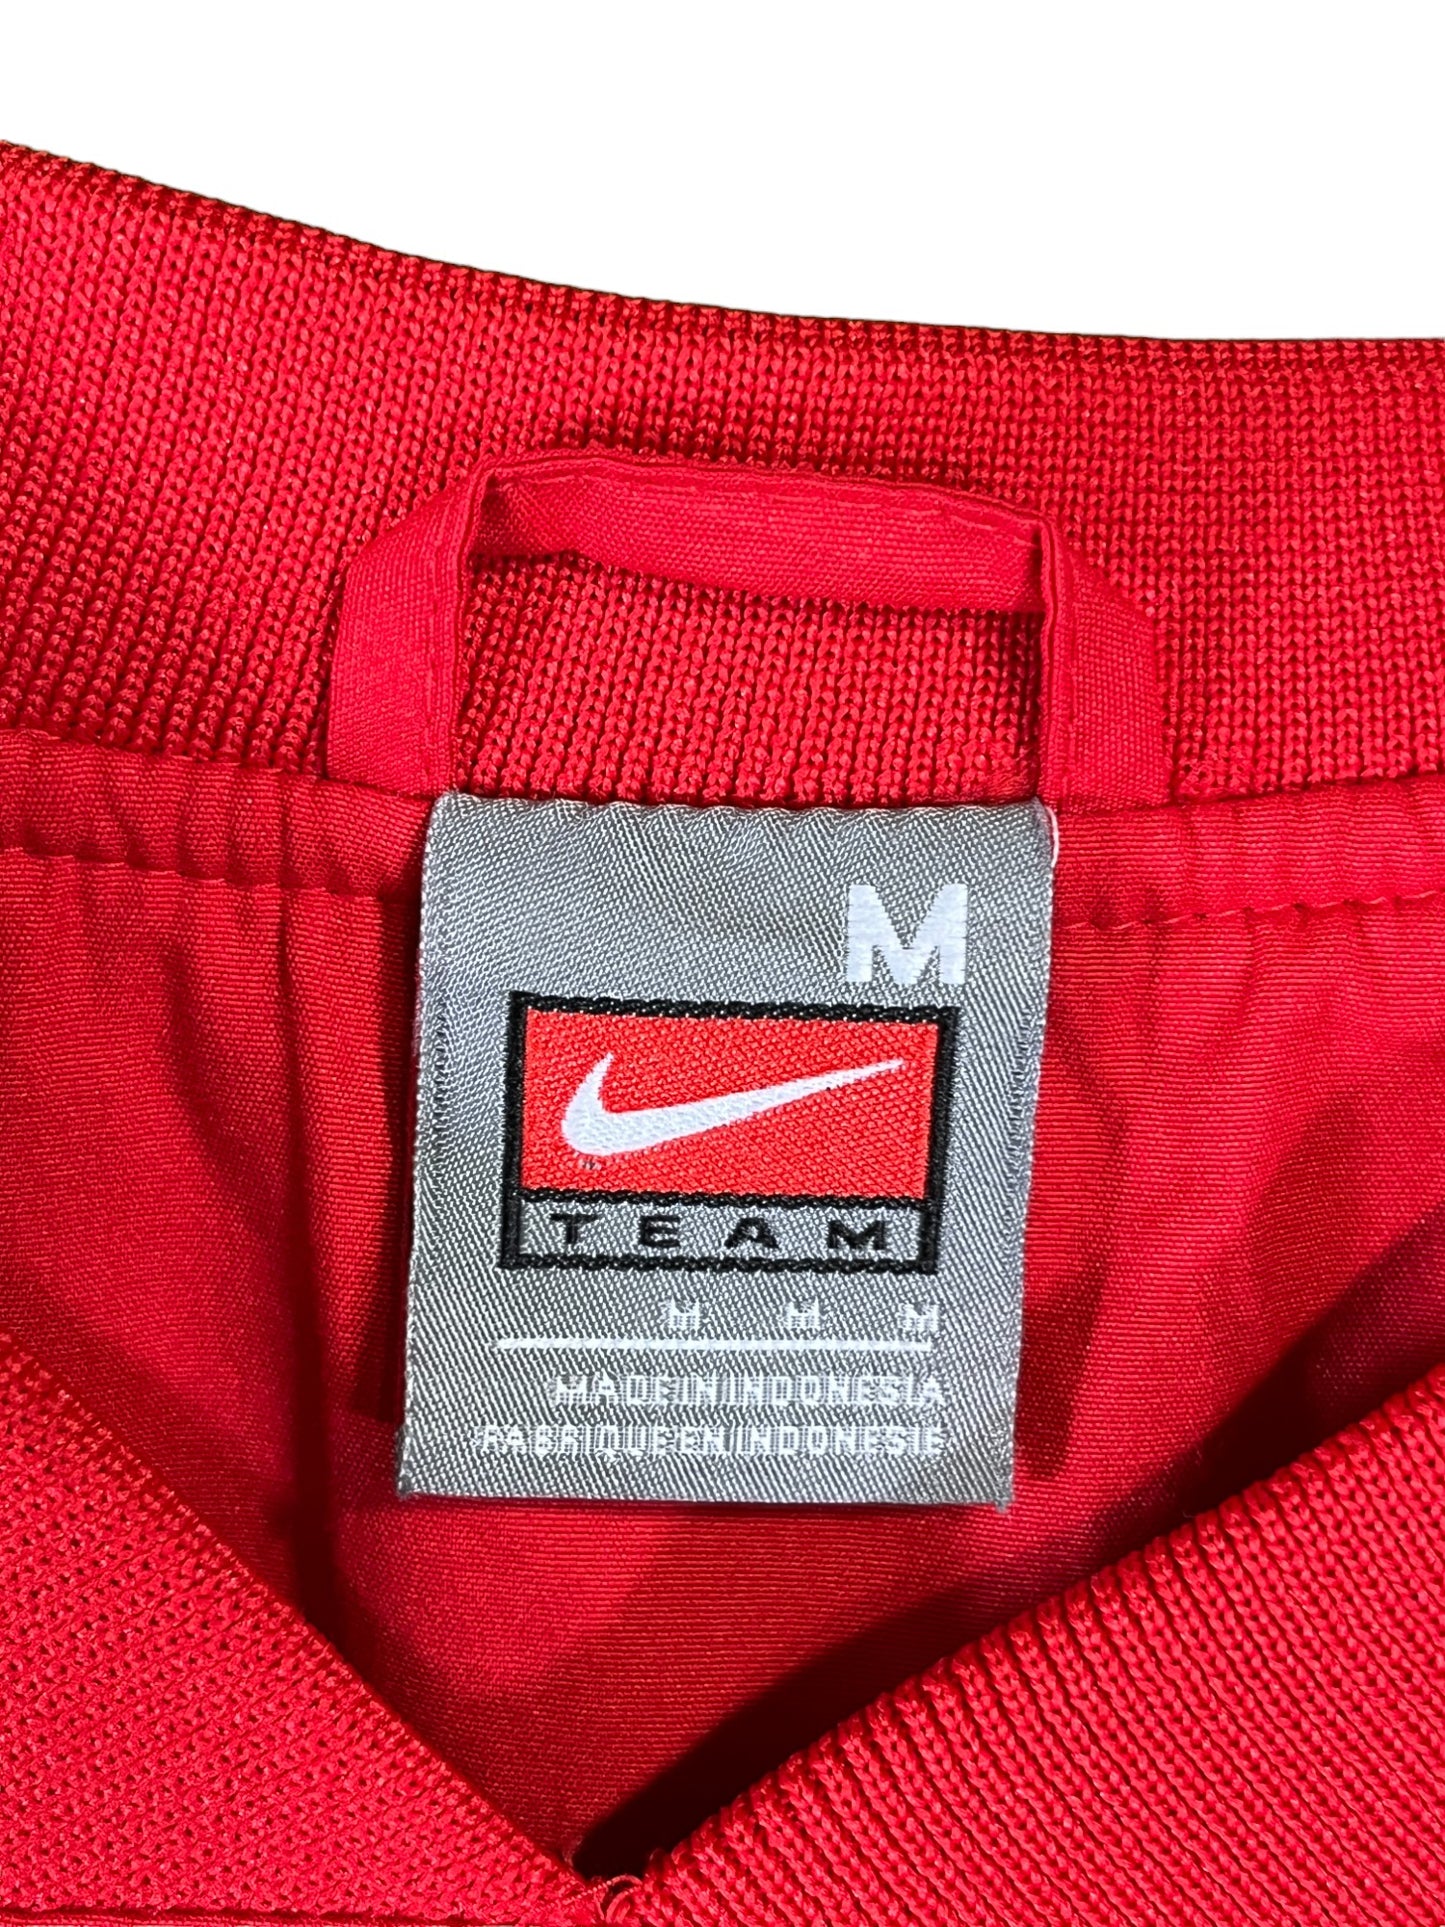 Vintage 00's Nike Billings Mustangs Center Swoosh Pullover Jacket Size Medium